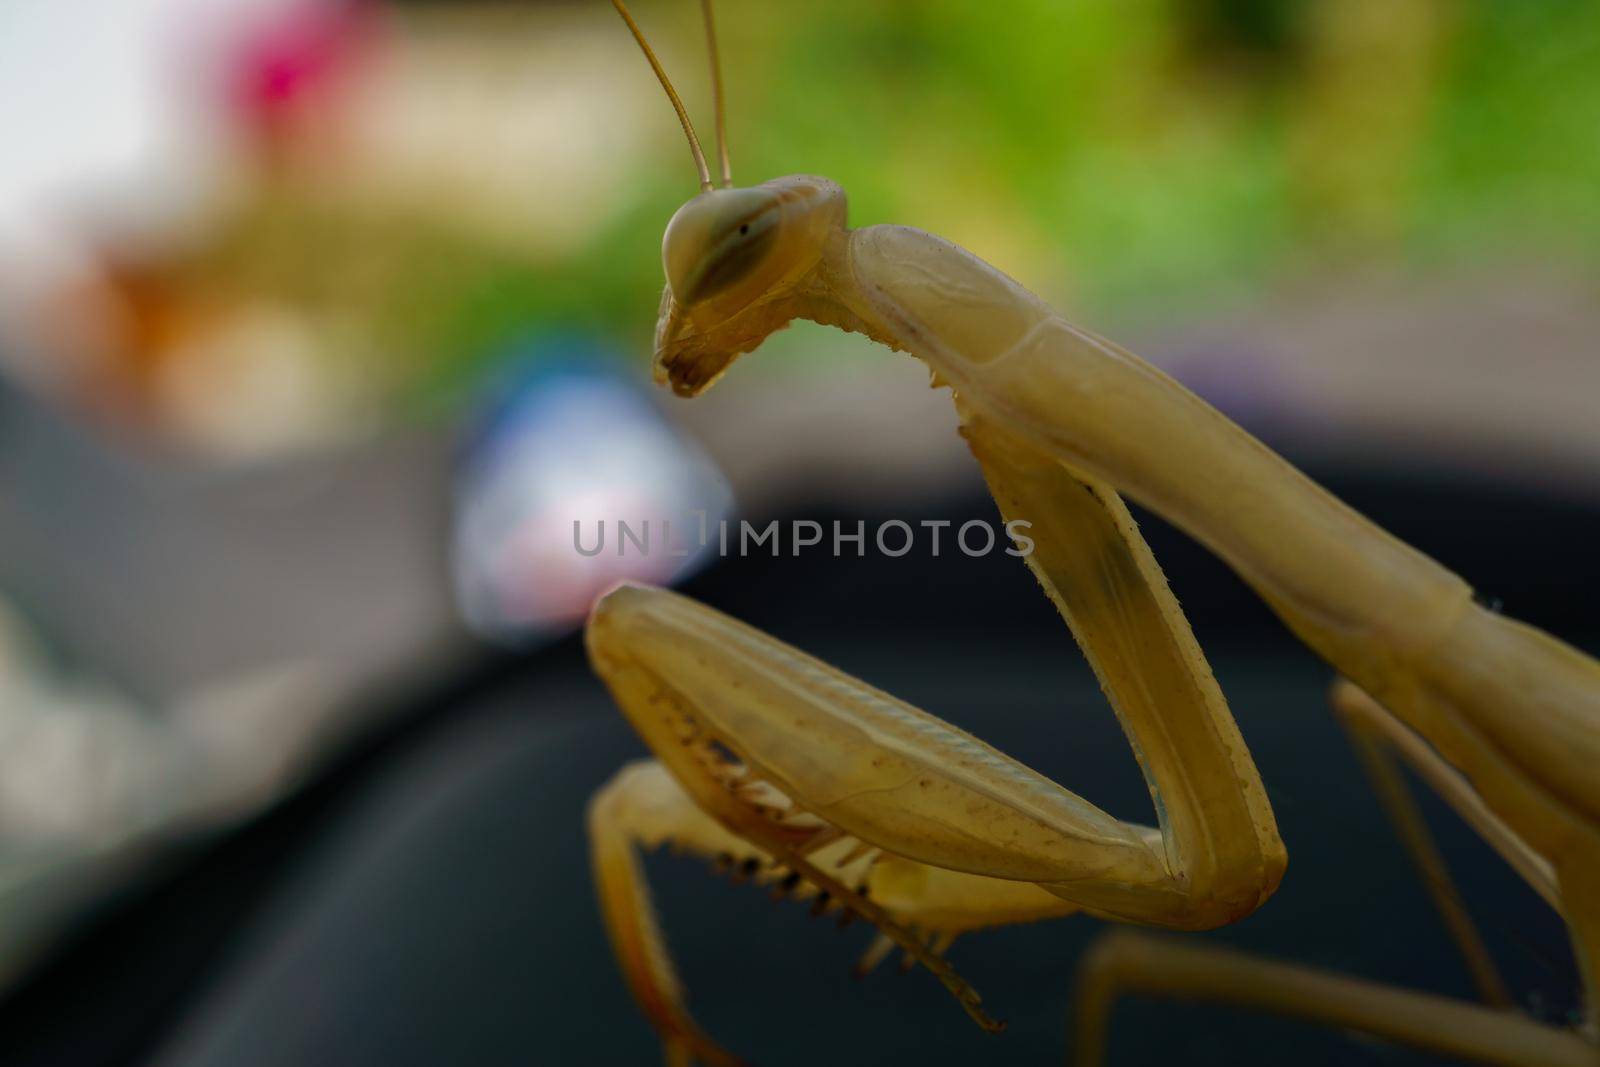 close-up of a yellow praying mantis macro photography